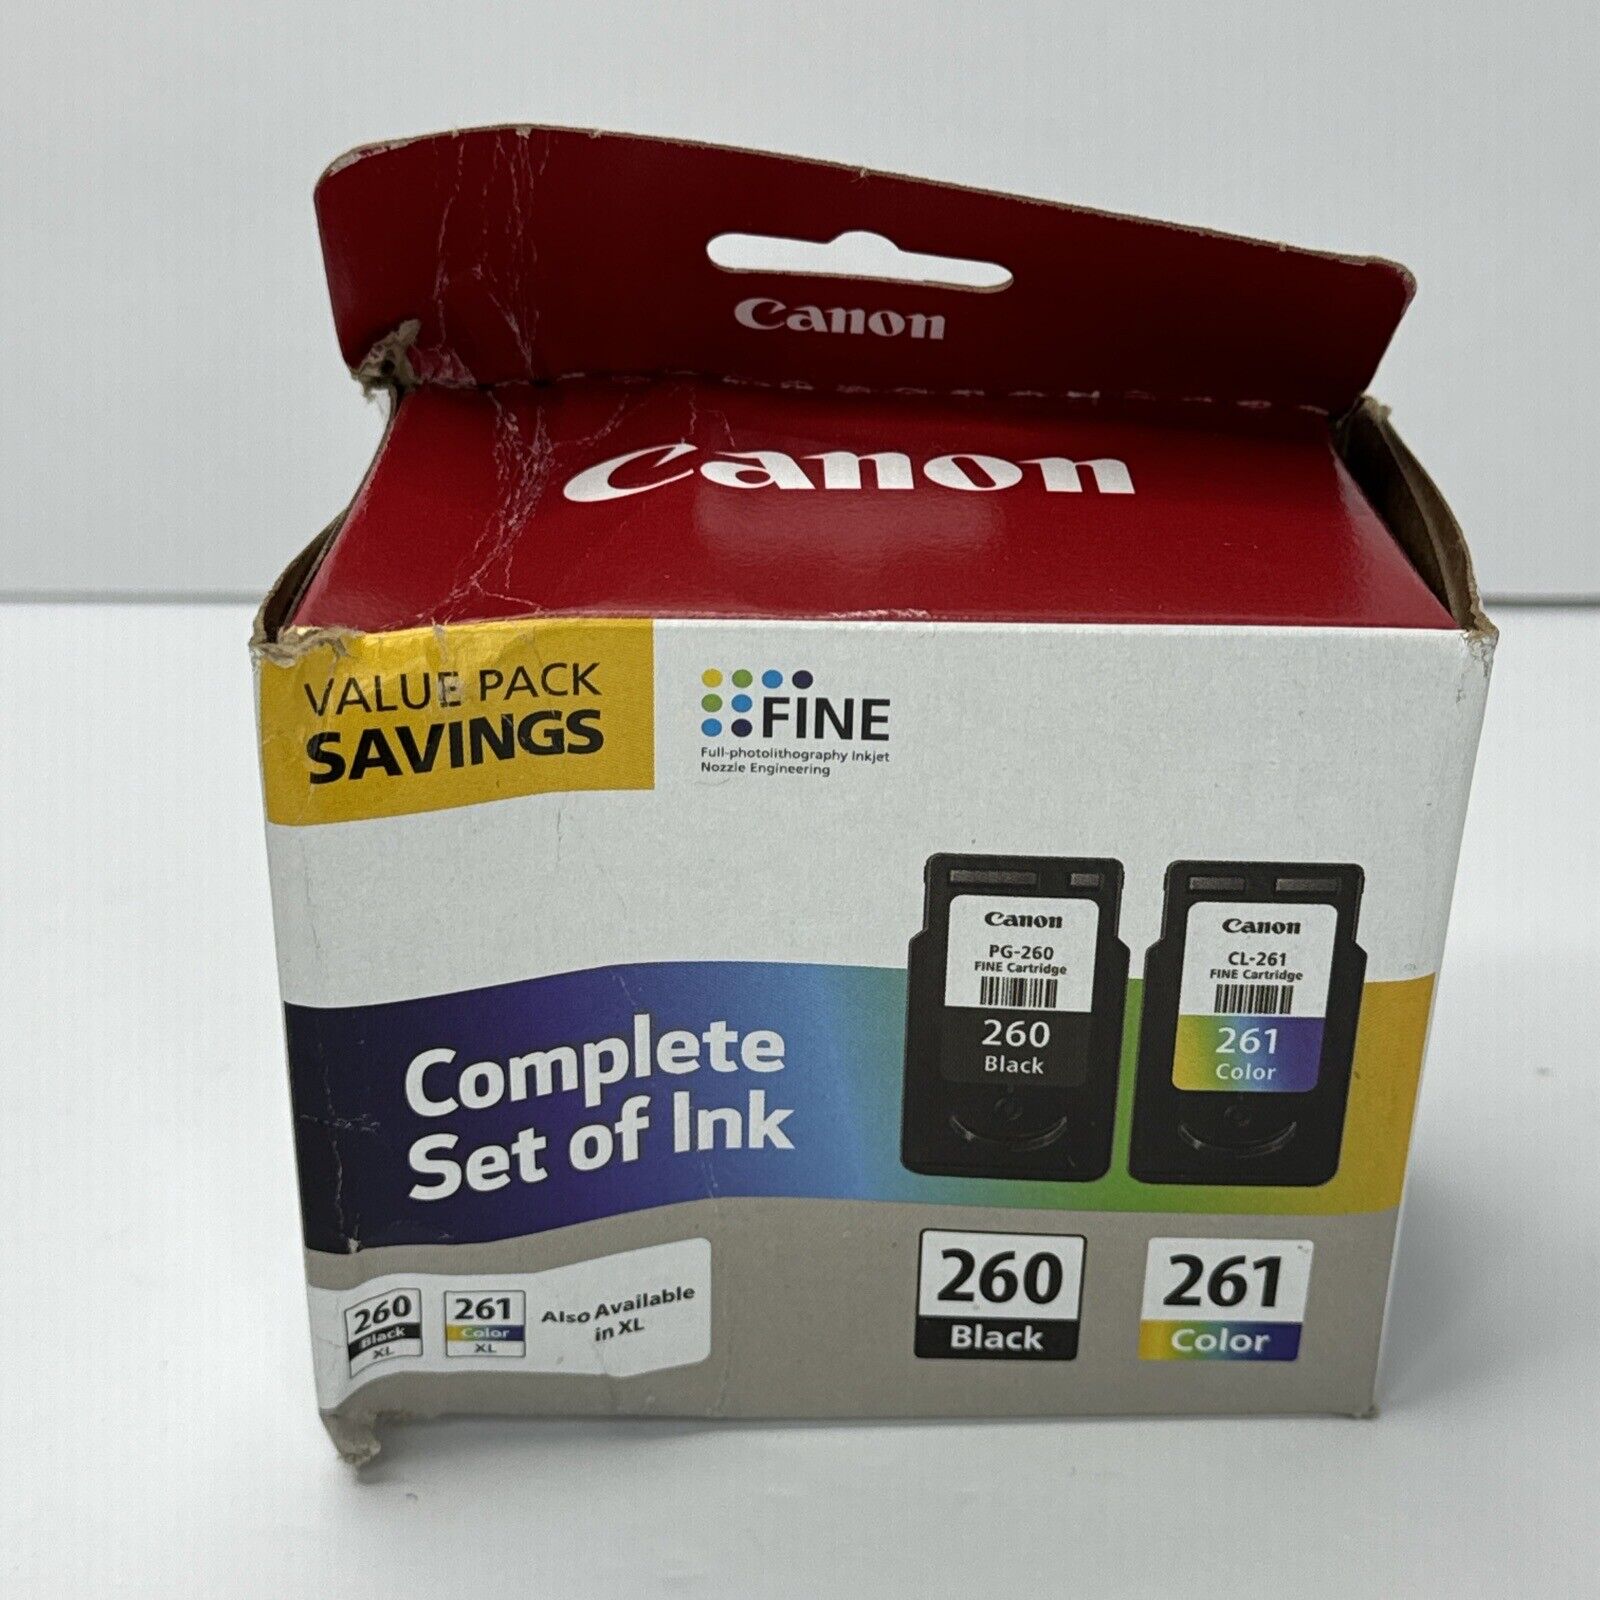 Canon PG-260 Black & CL-261 Color Complete Set of Ink Value Pack 260 261